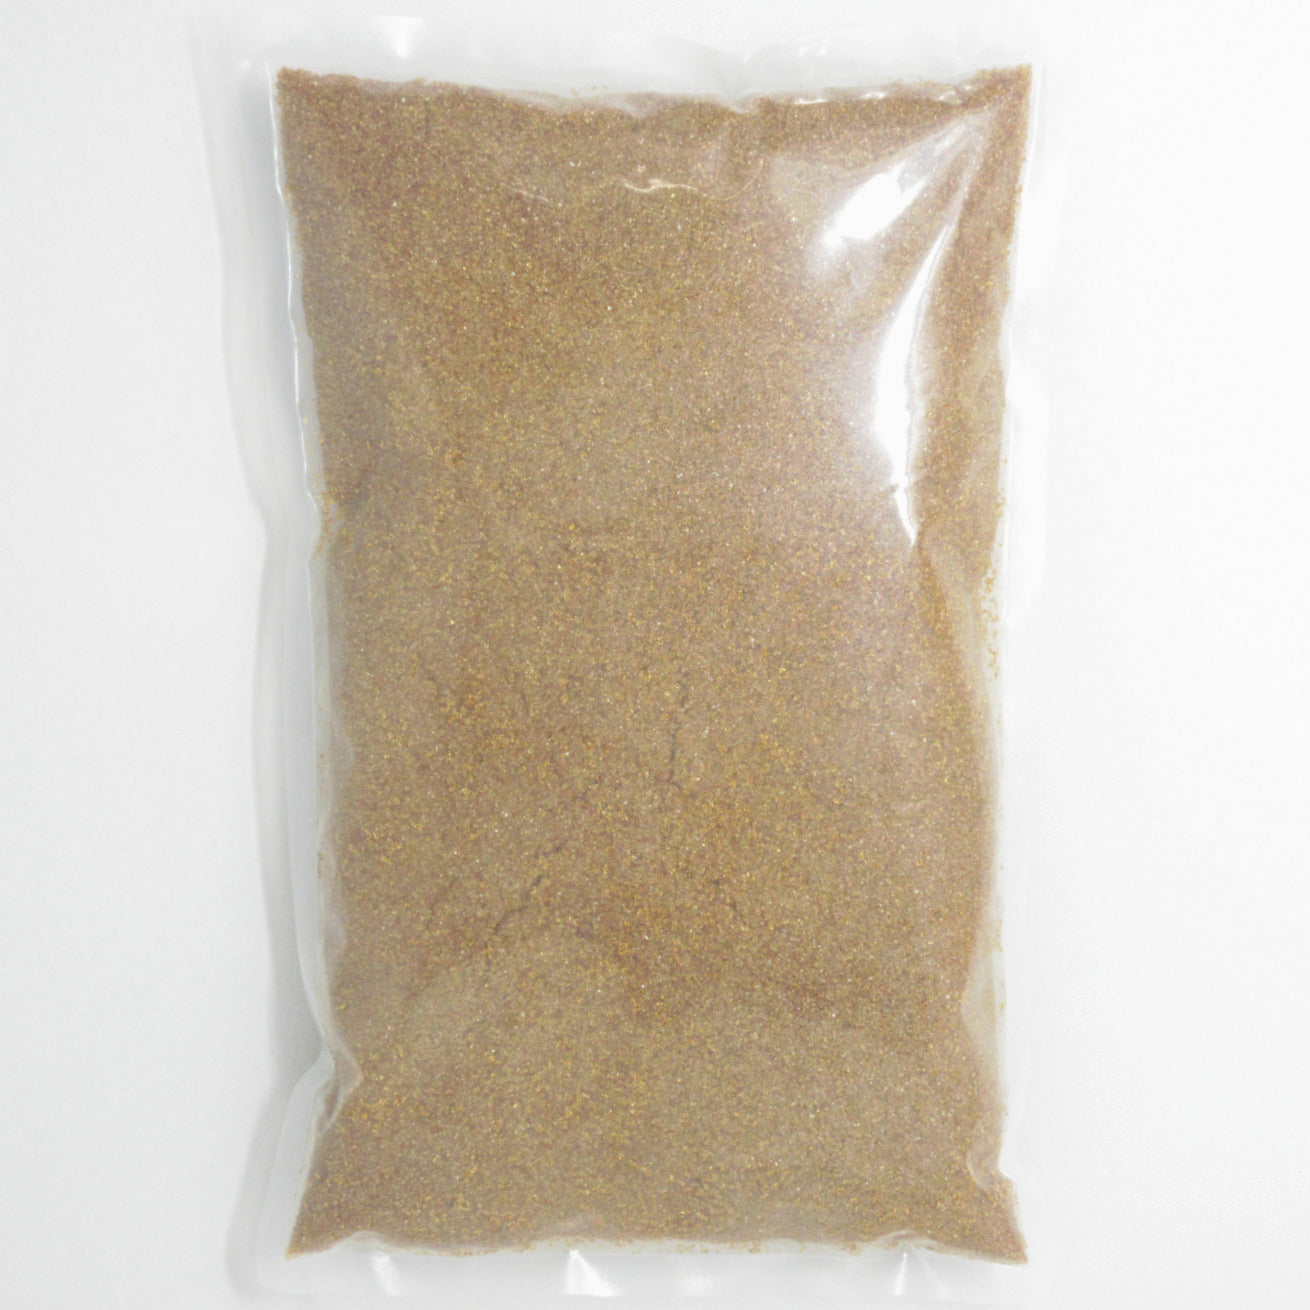 Flour Barrel product image - Demerara Sugar